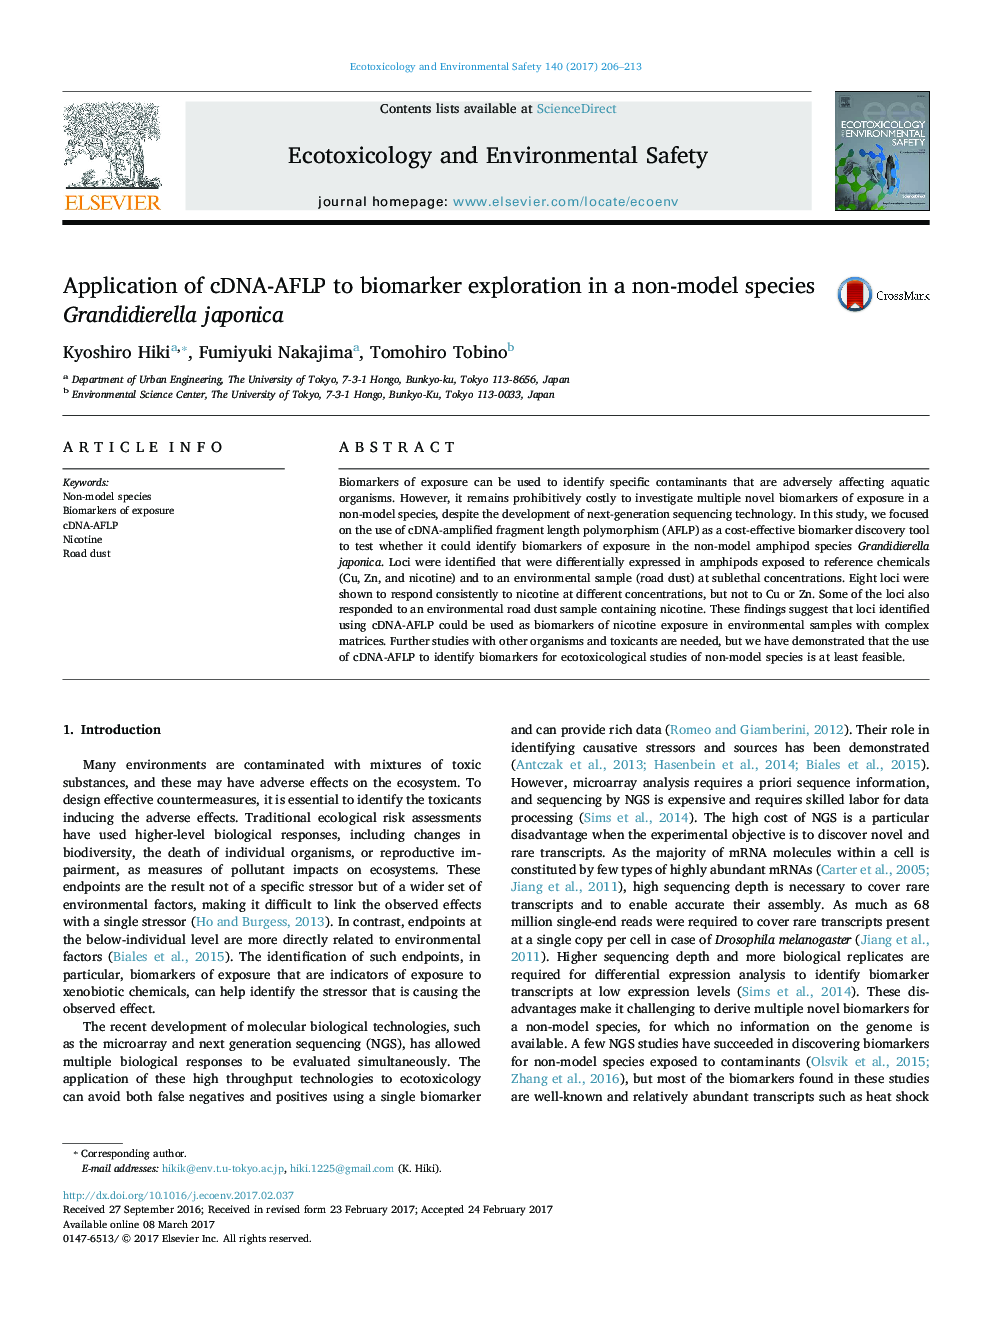 Application of cDNA-AFLP to biomarker exploration in a non-model species Grandidierella japonica